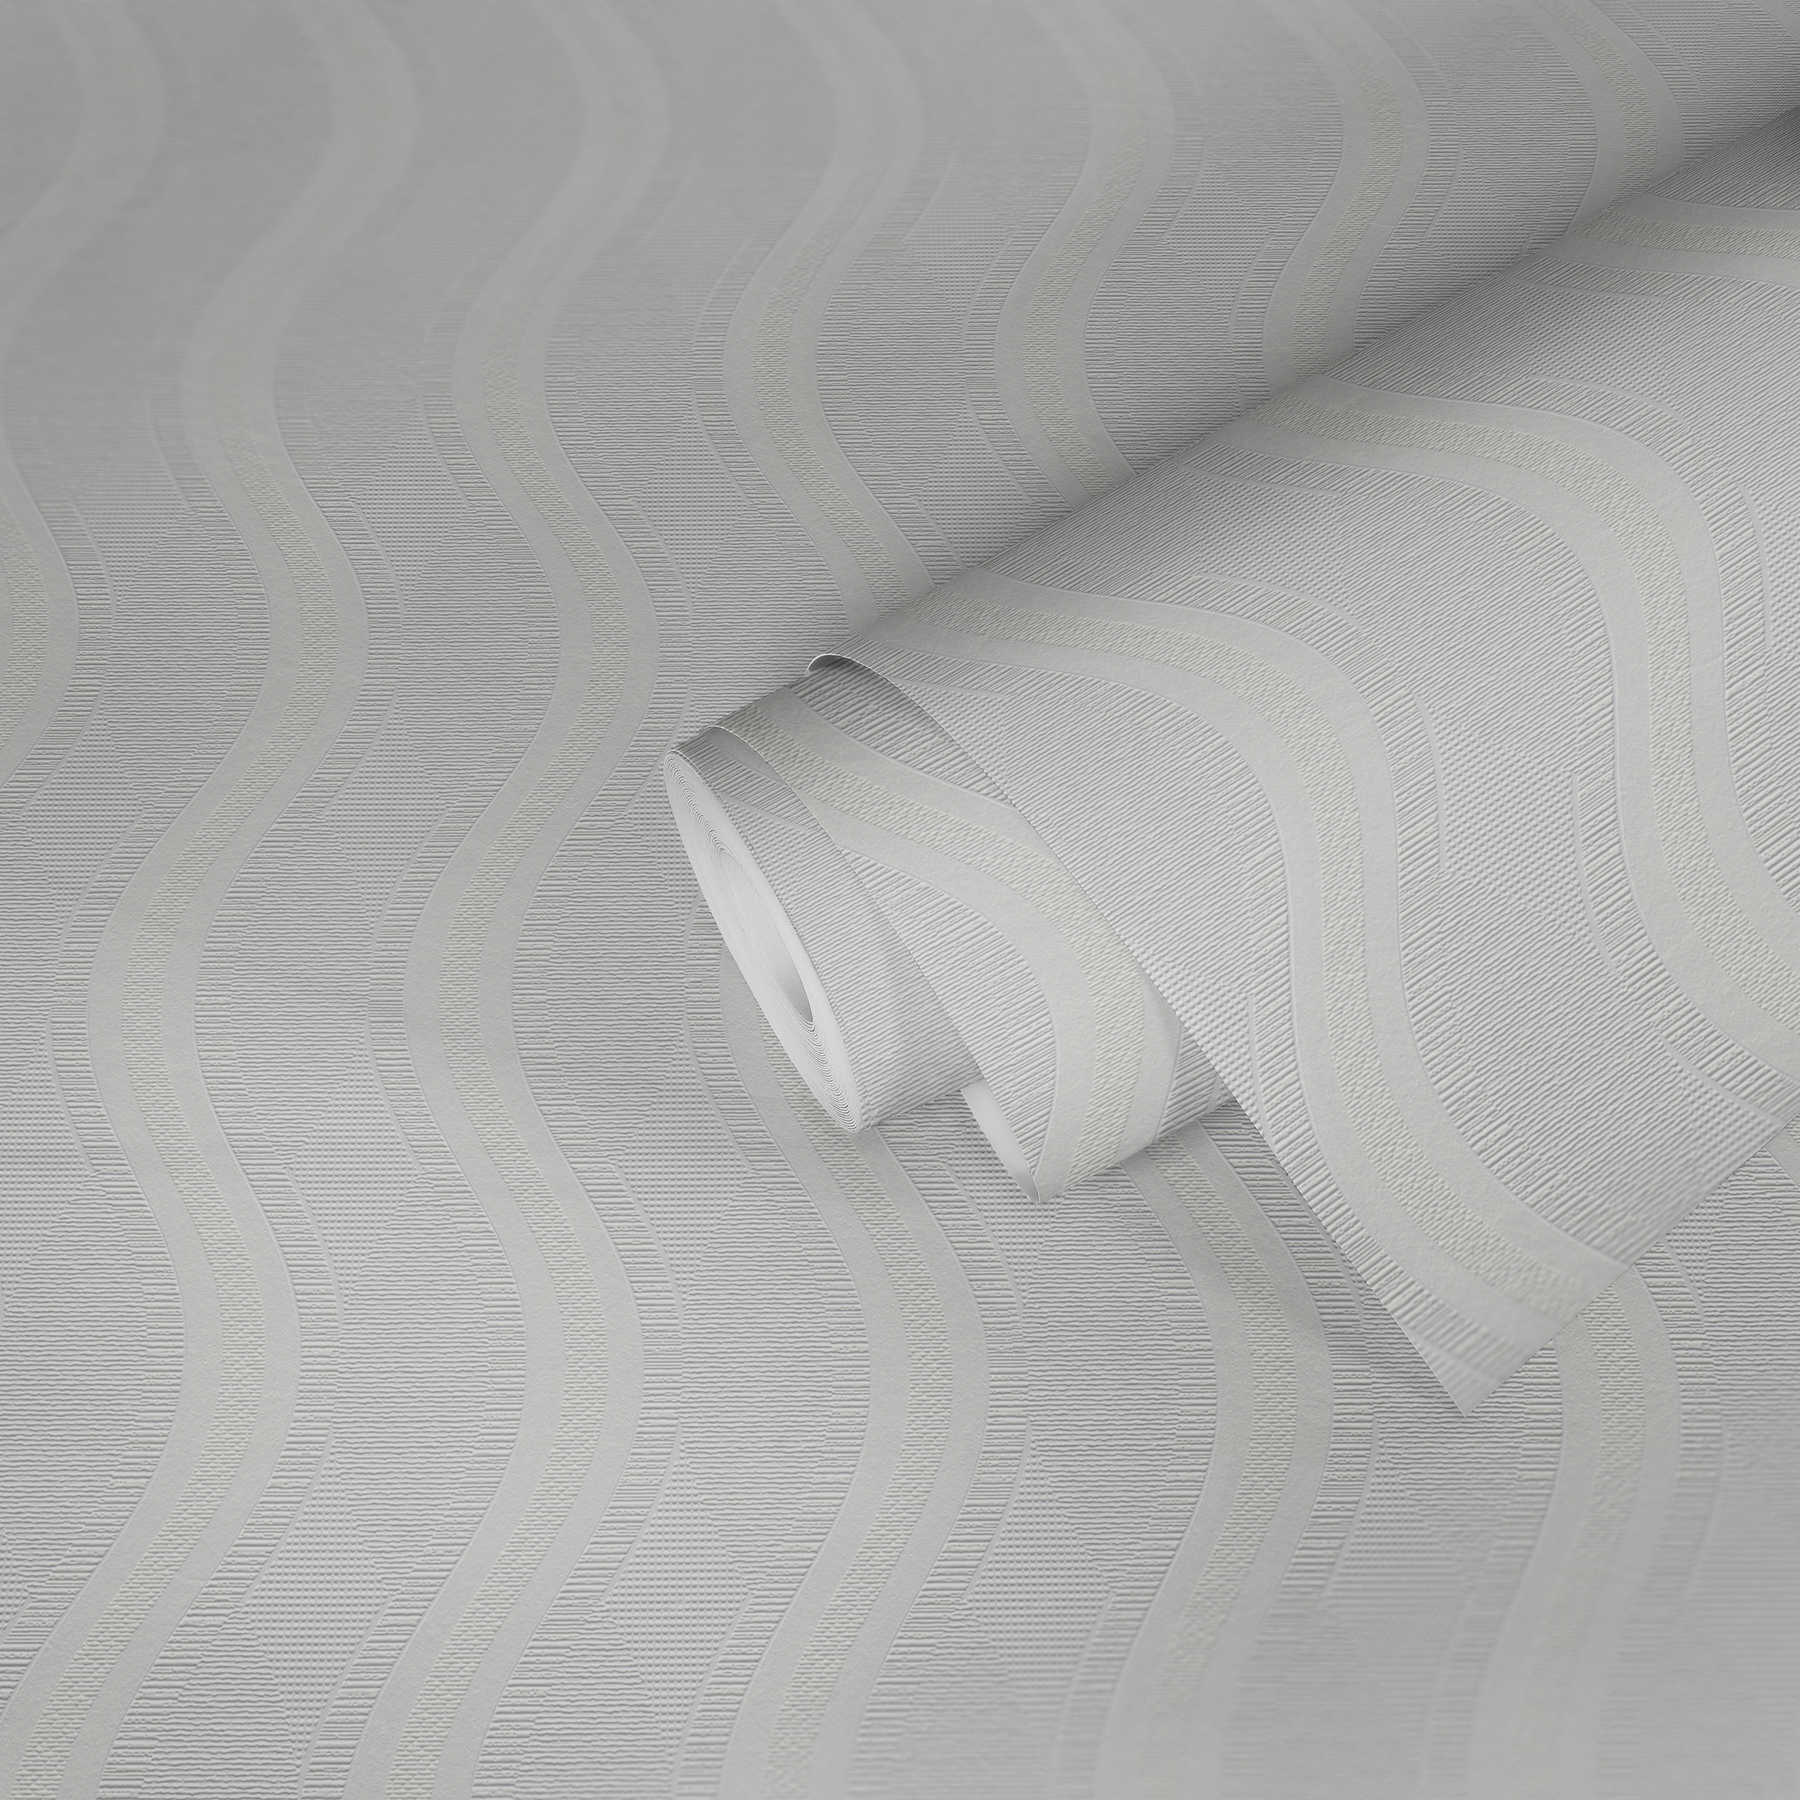             Papel pintado retro blanco con motivos geométricos ondulados - blanco
        